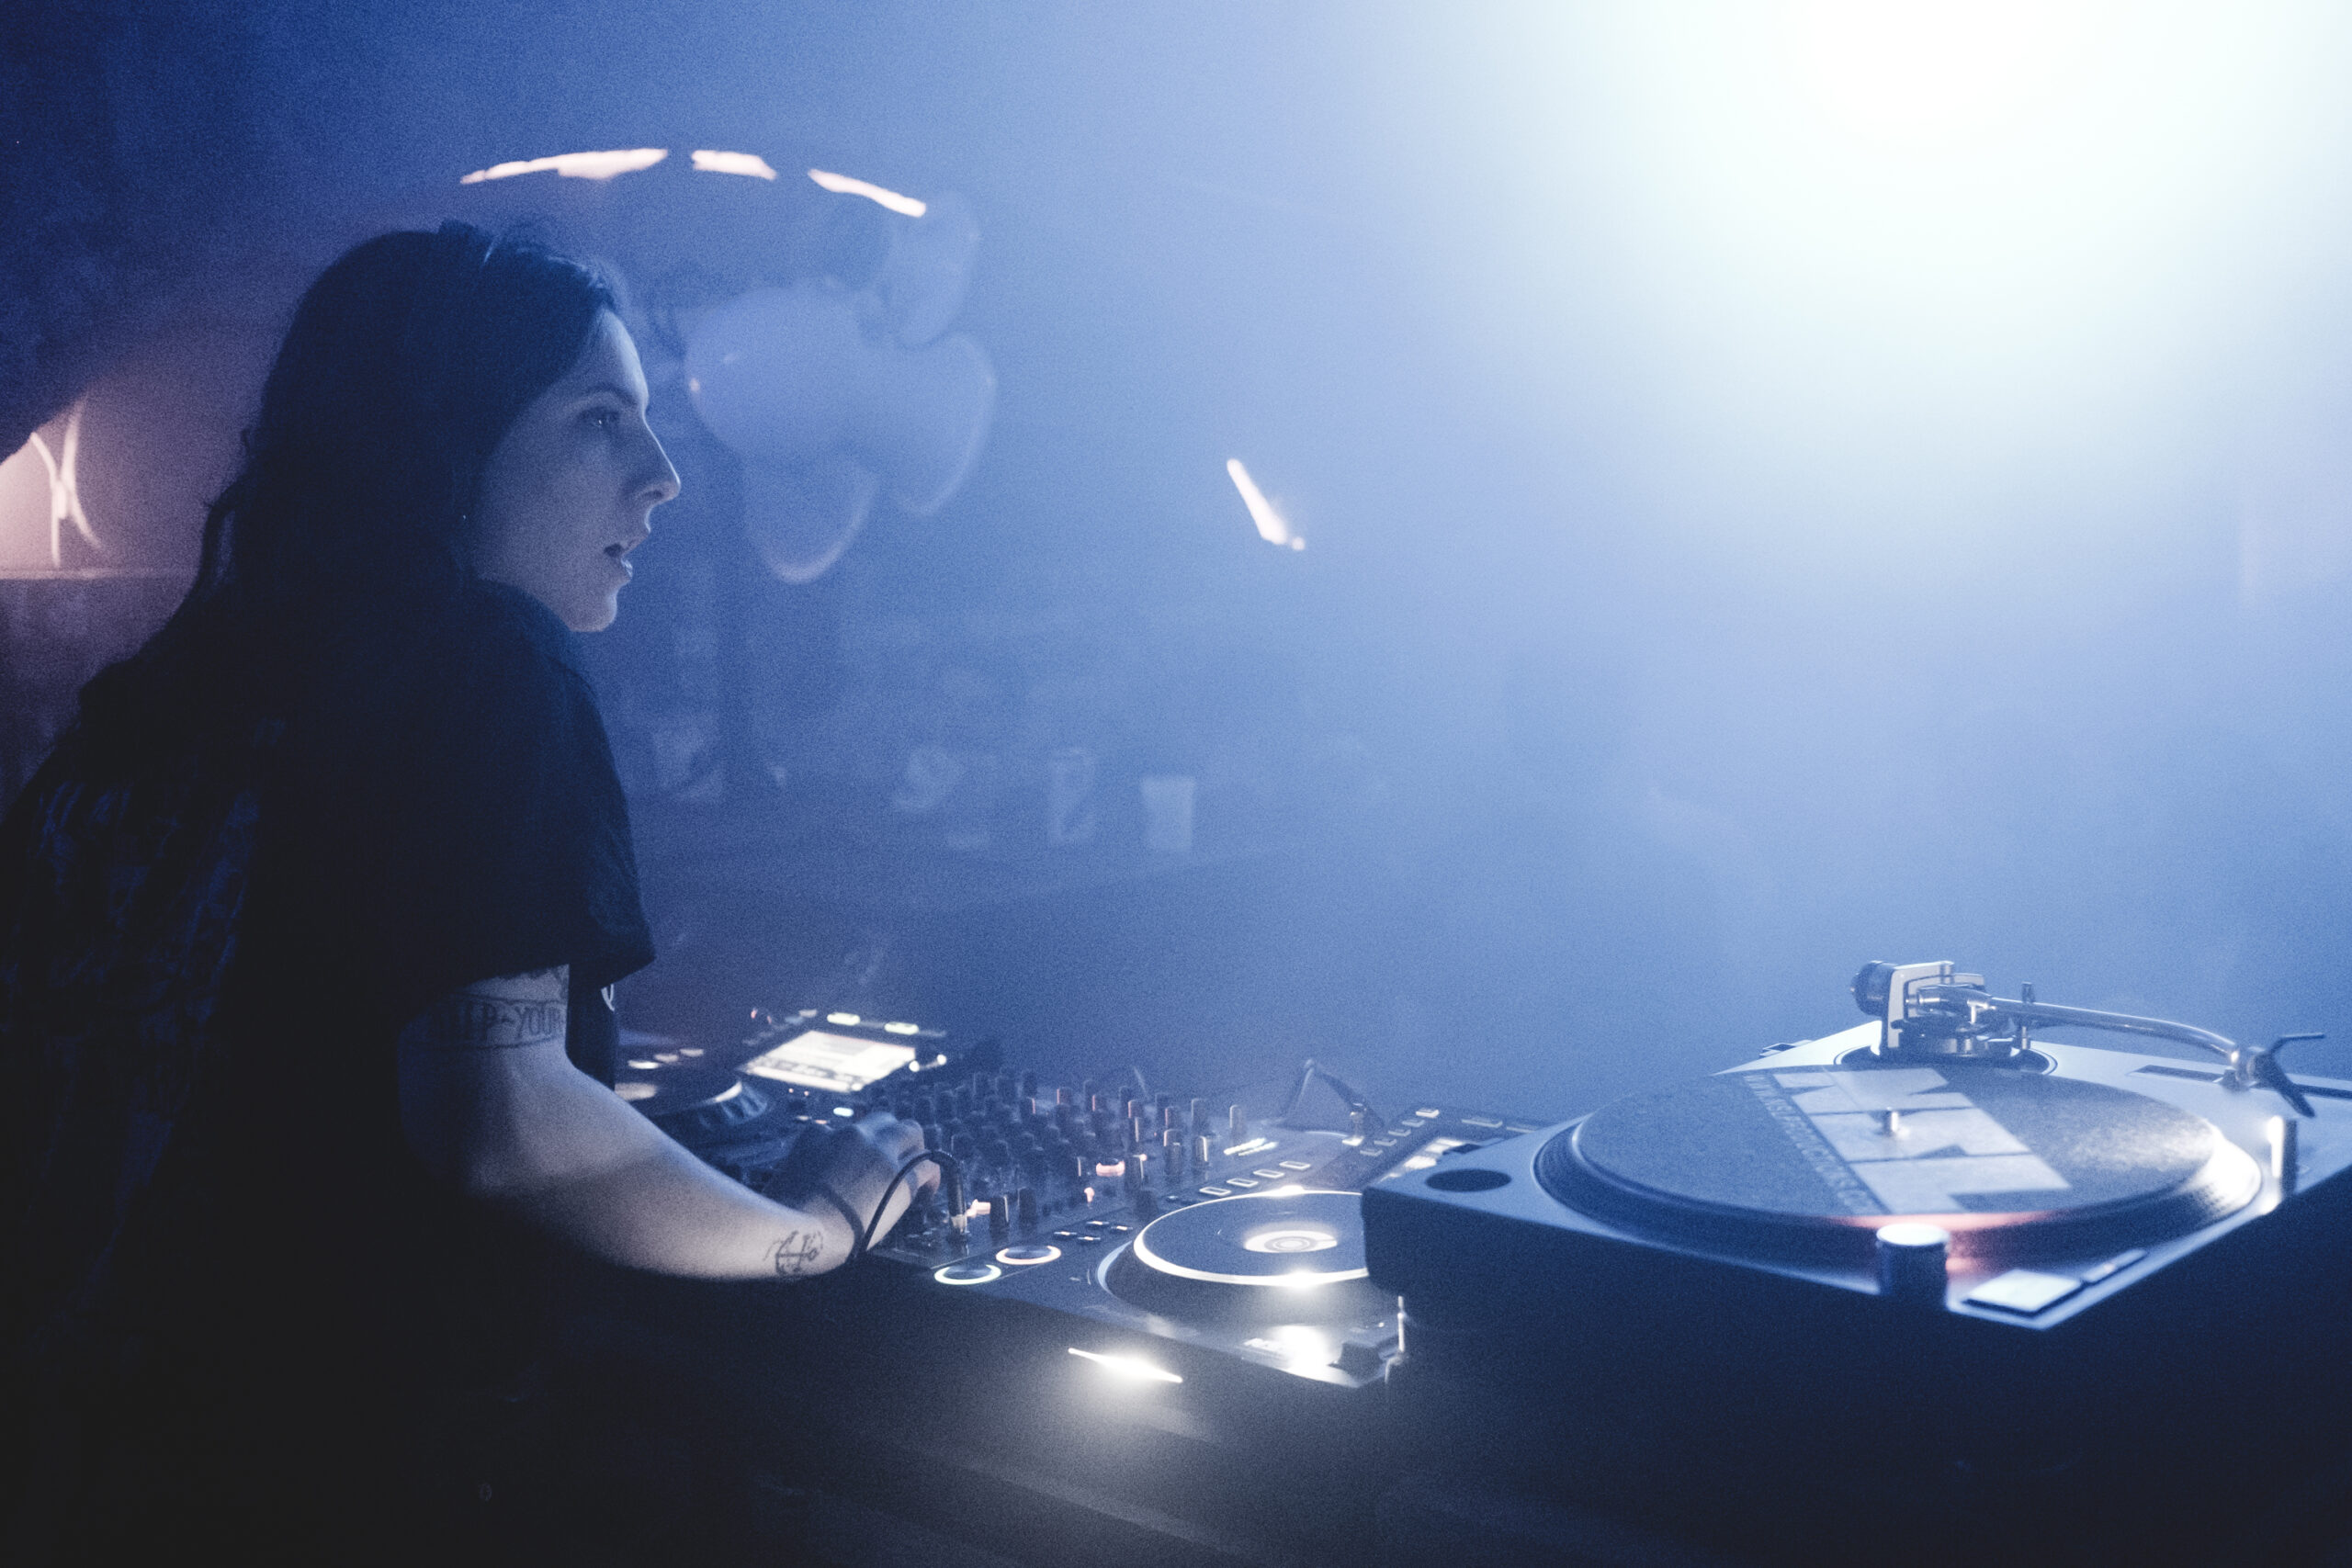 A woman with black hair DJ's in a smokey club.